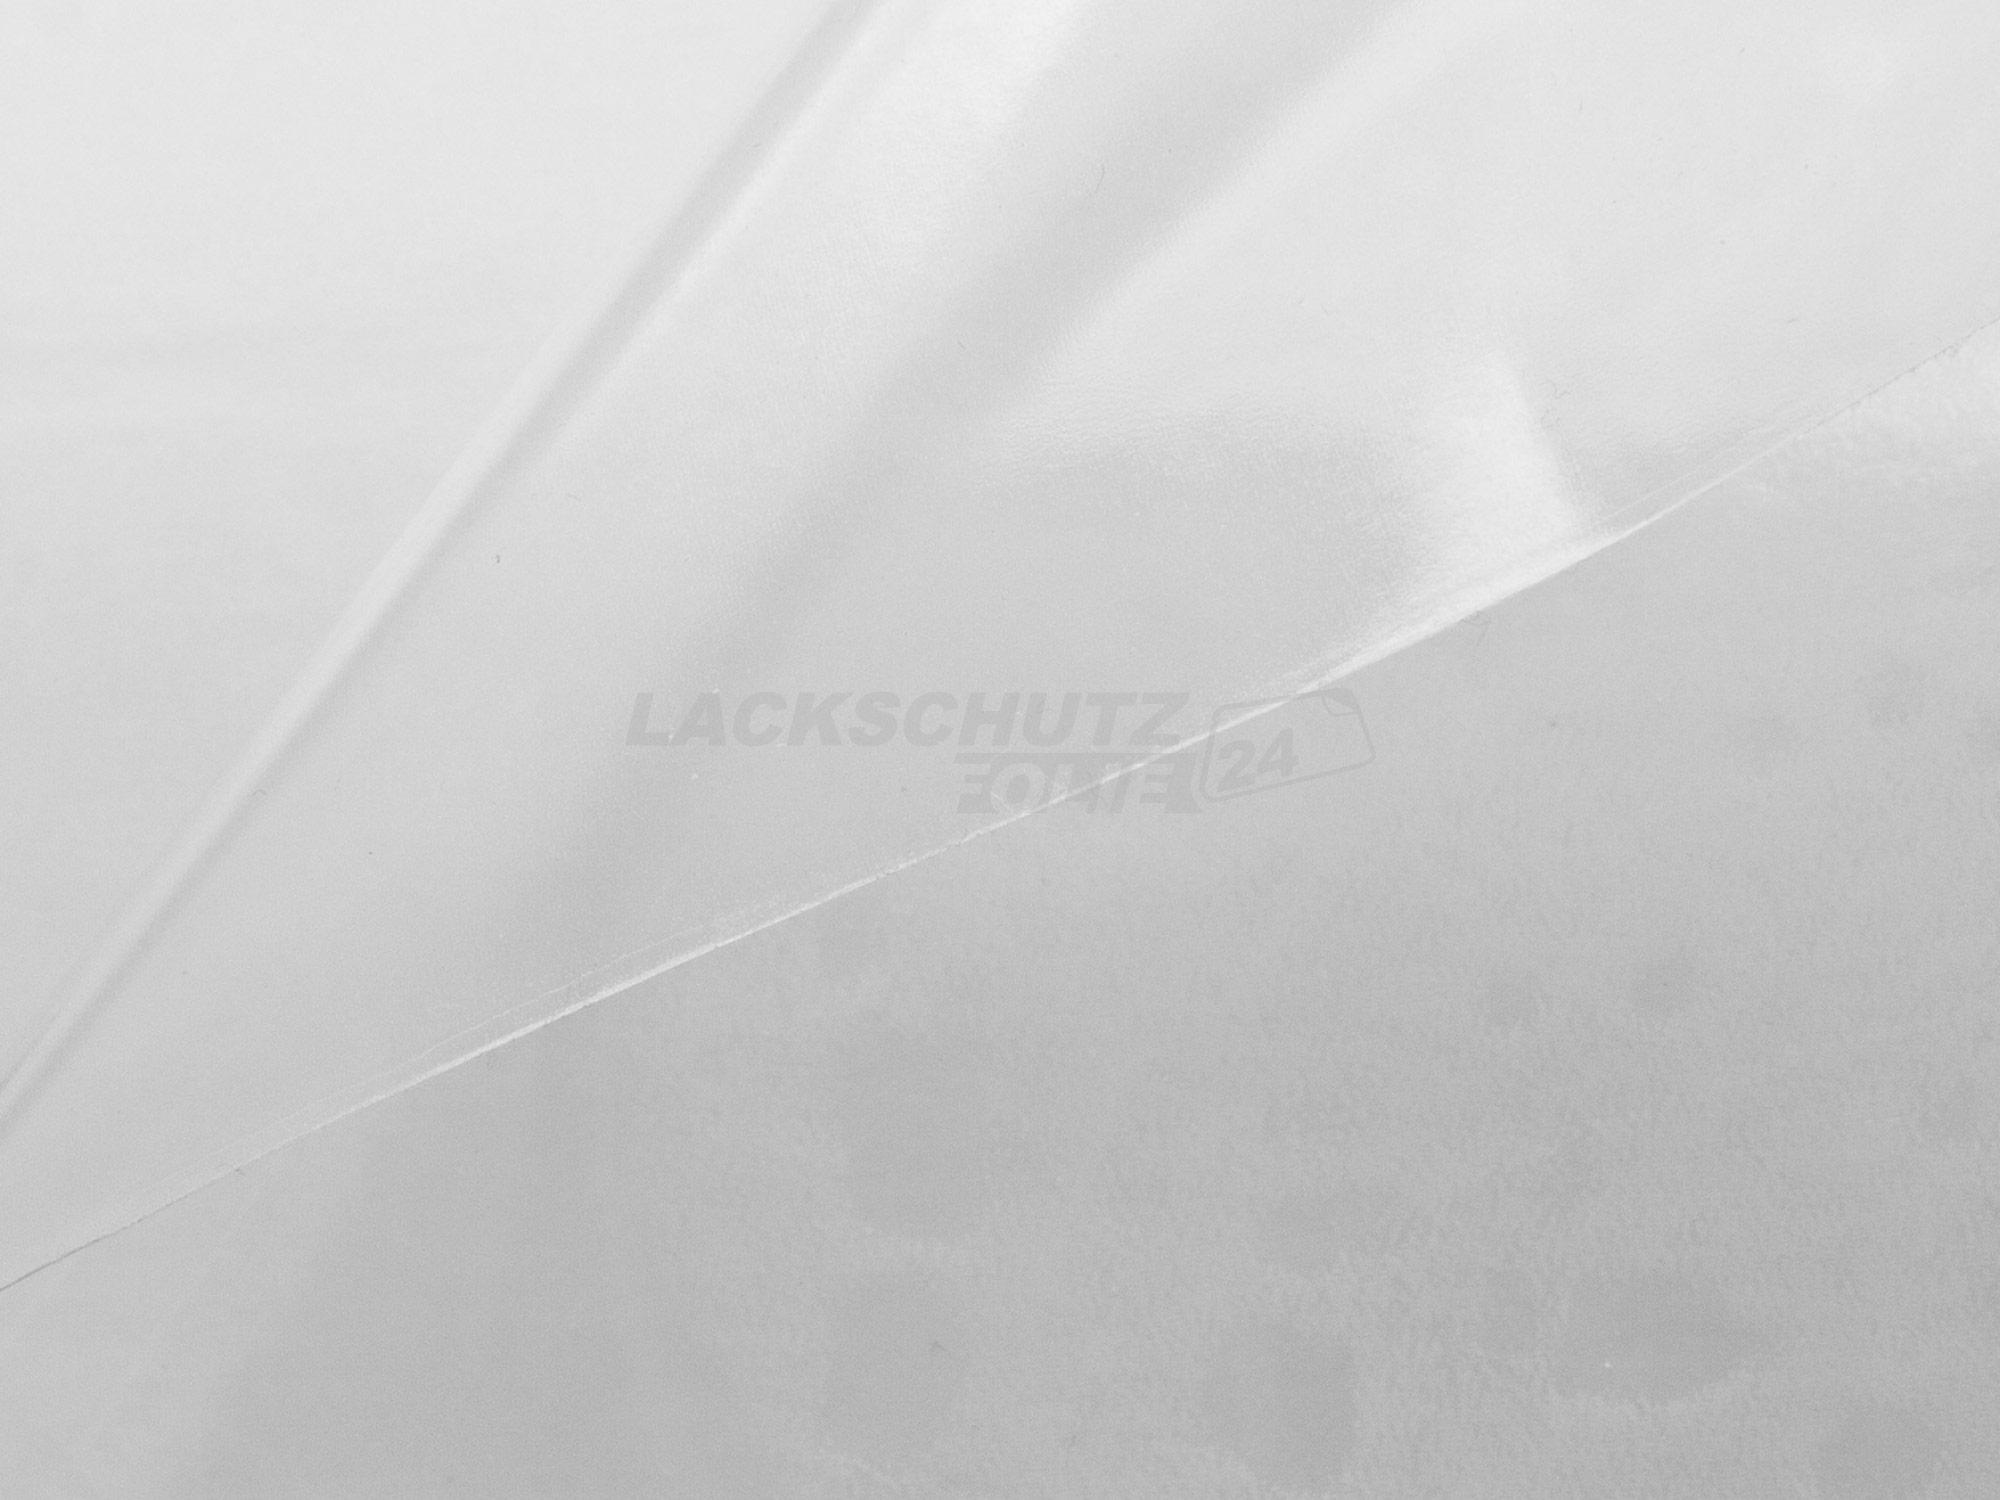 Ladekantenschutzfolie - Transparent Glatt Hochglänzend 240 µm stark für Audi A3 Sportback Typ 8V, BJ 02/2013-2020